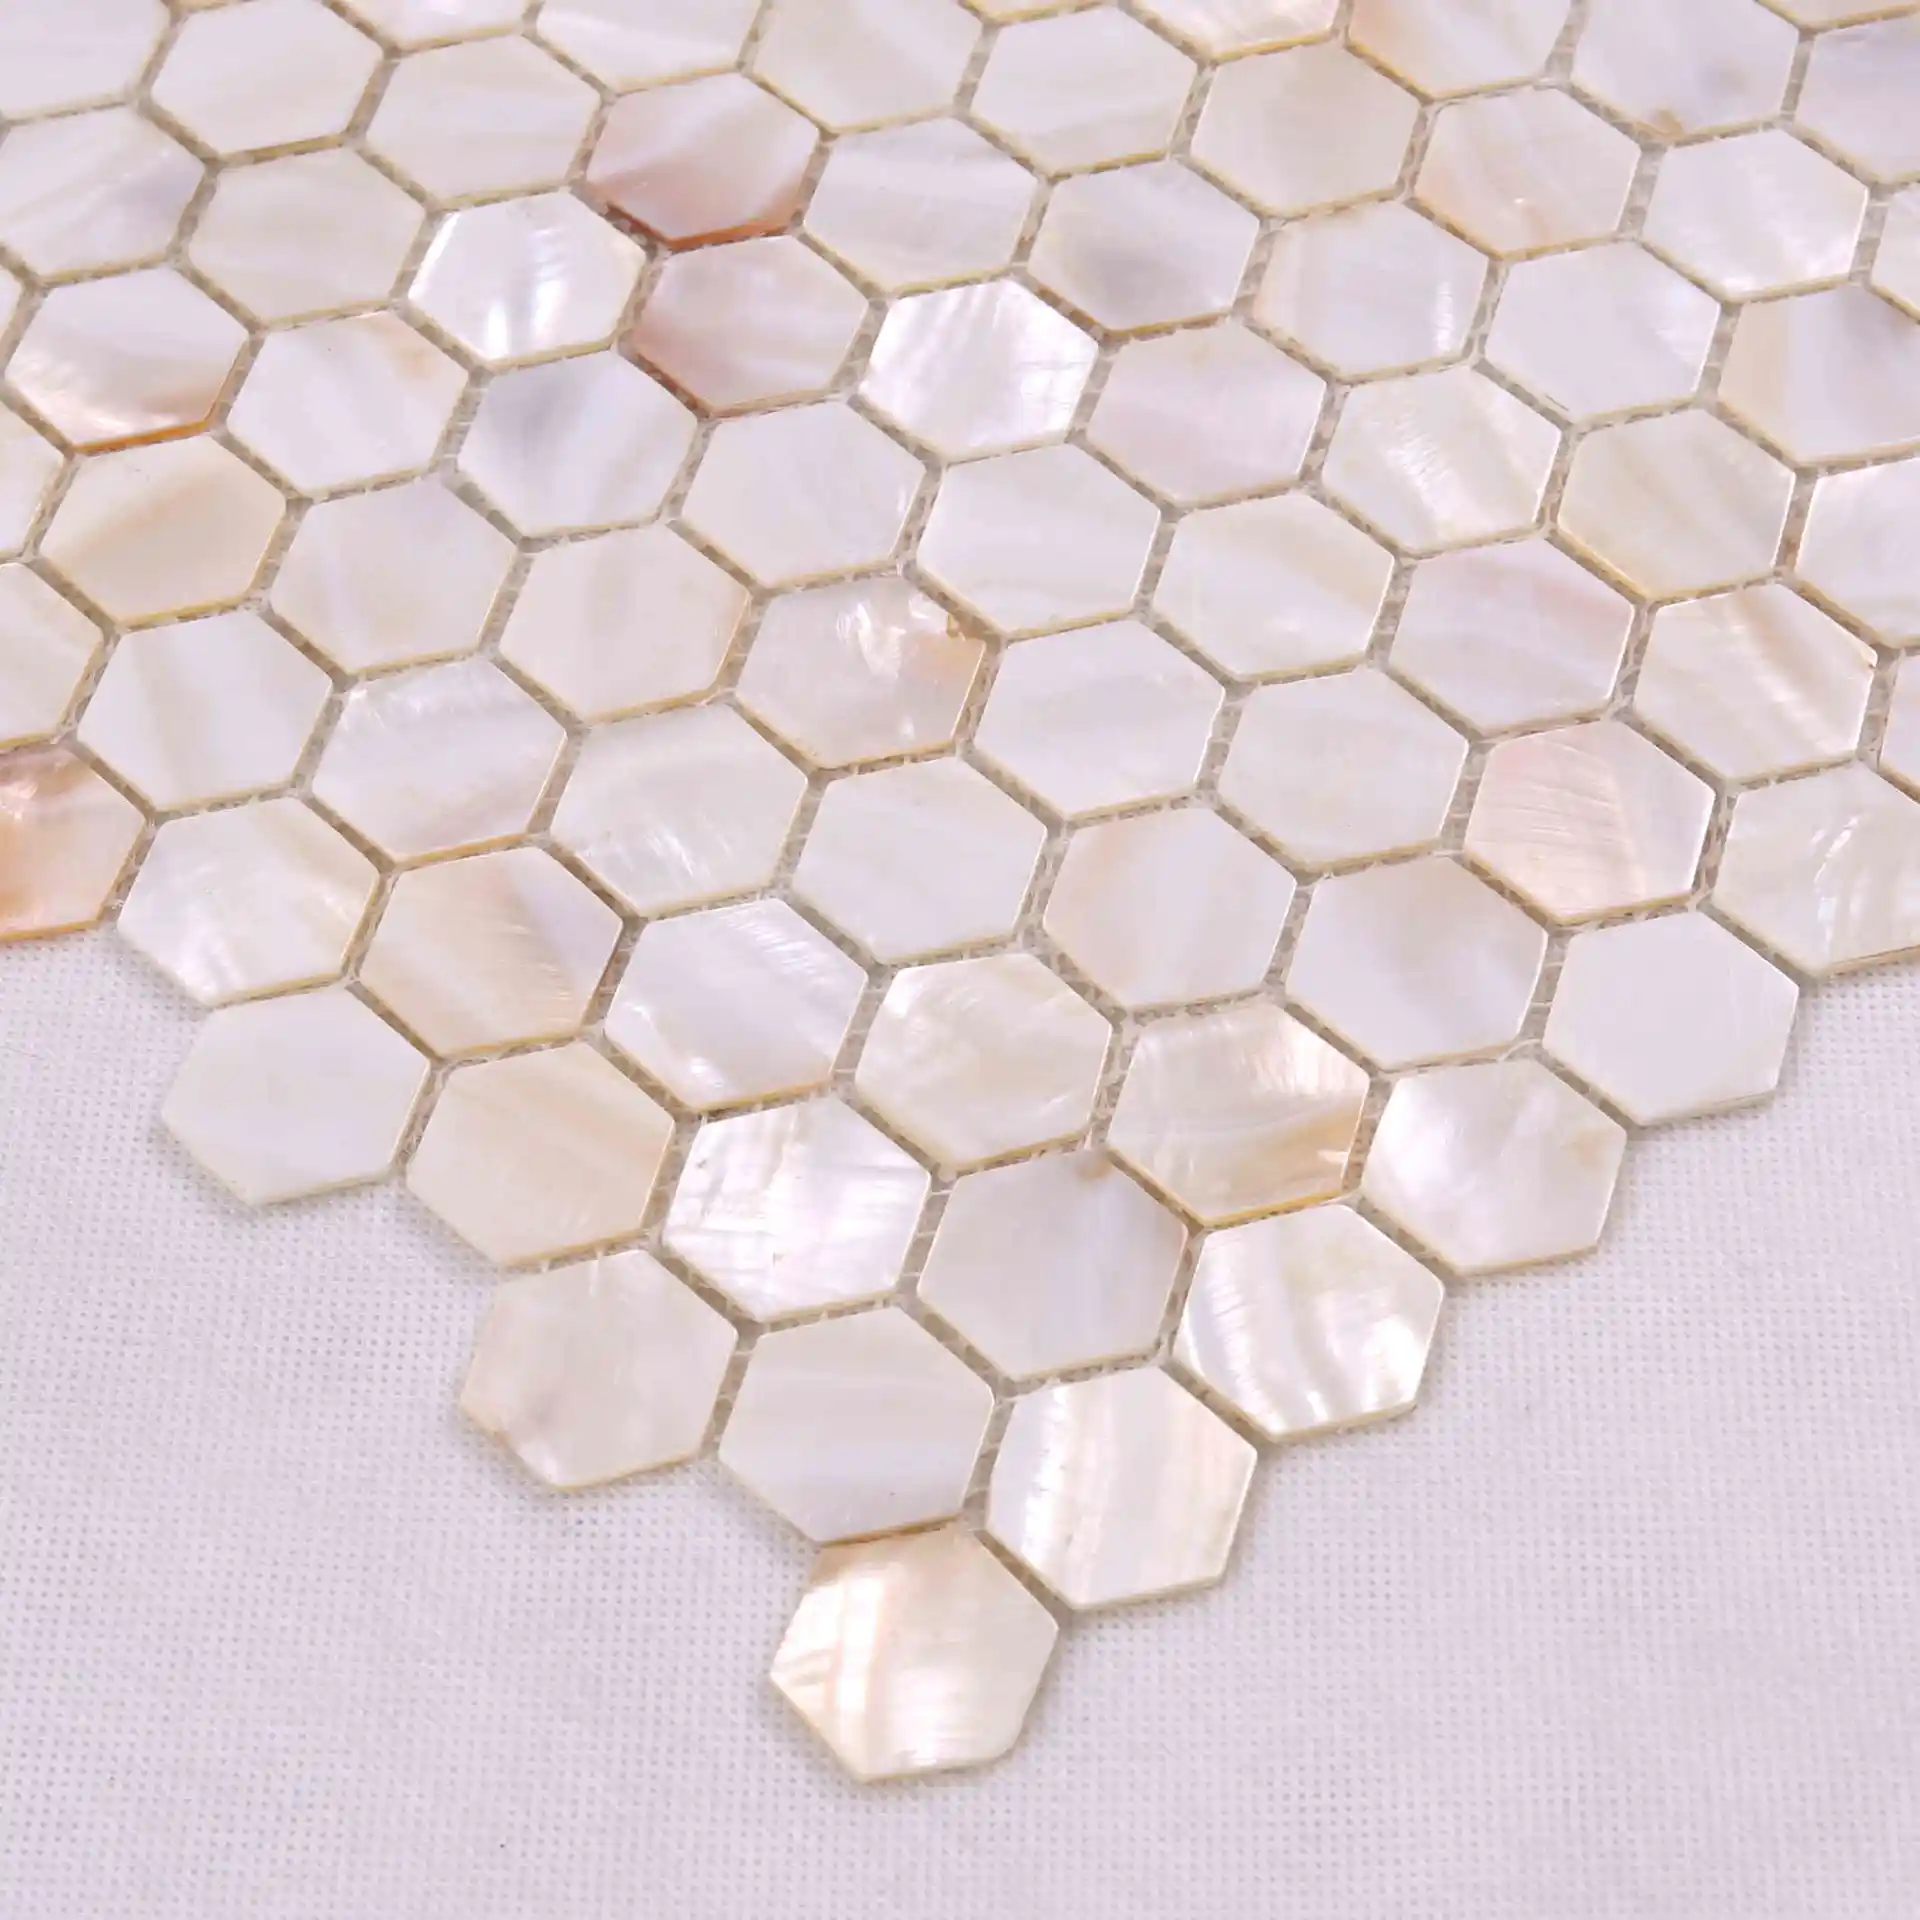 Luxury Style Natual Hexagon Shape Mother of Pearl Tile BK17